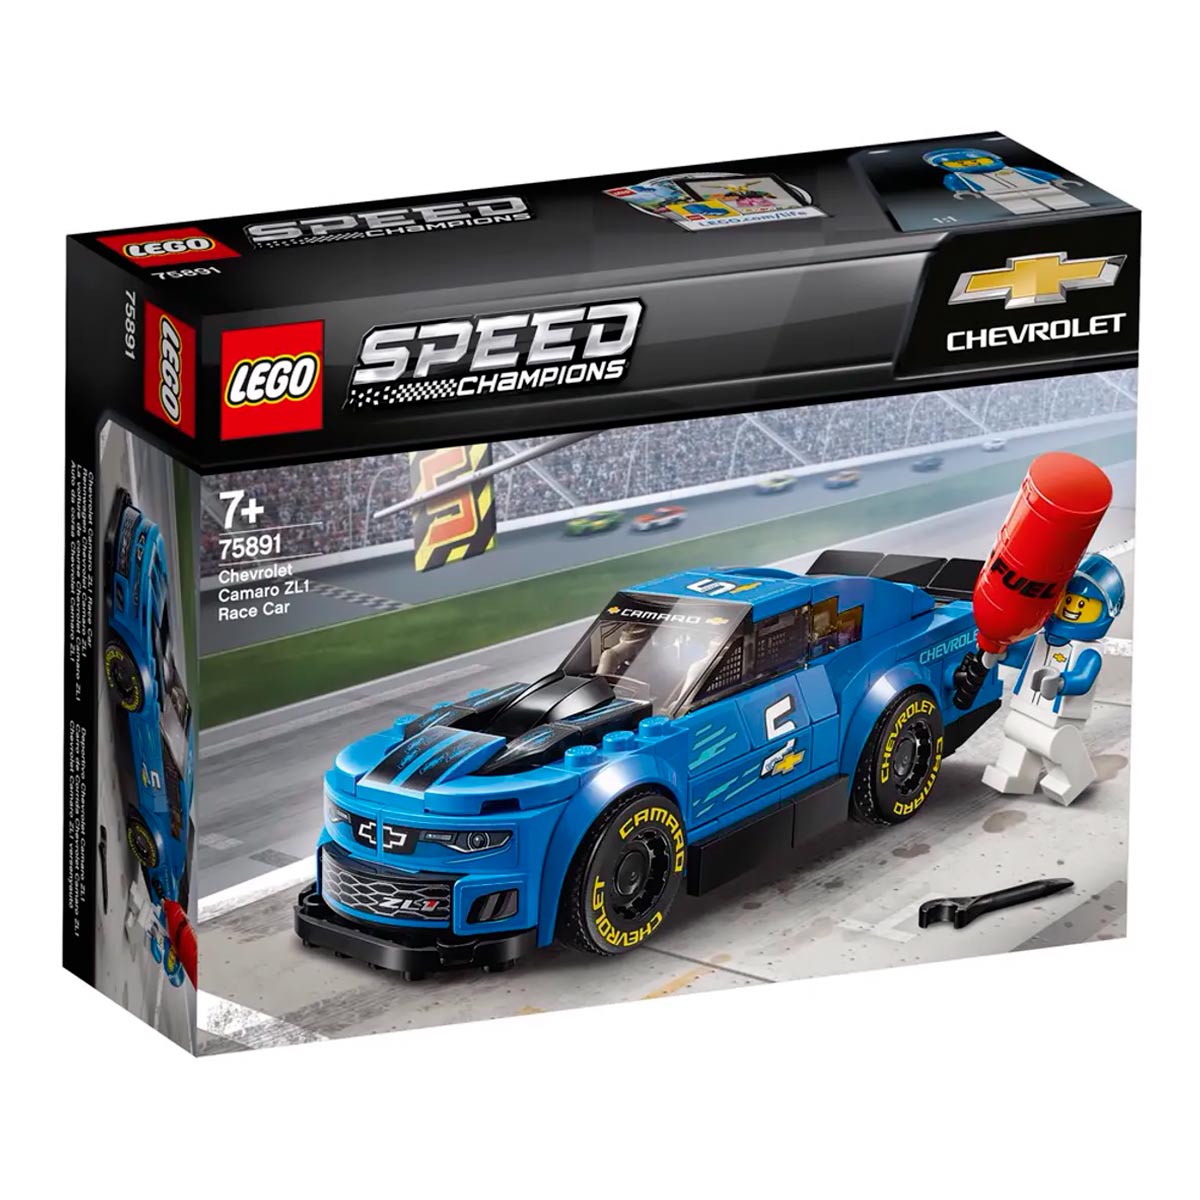 LEGO Speed Champions - Chevrolet Camaro ZL1 - 75891